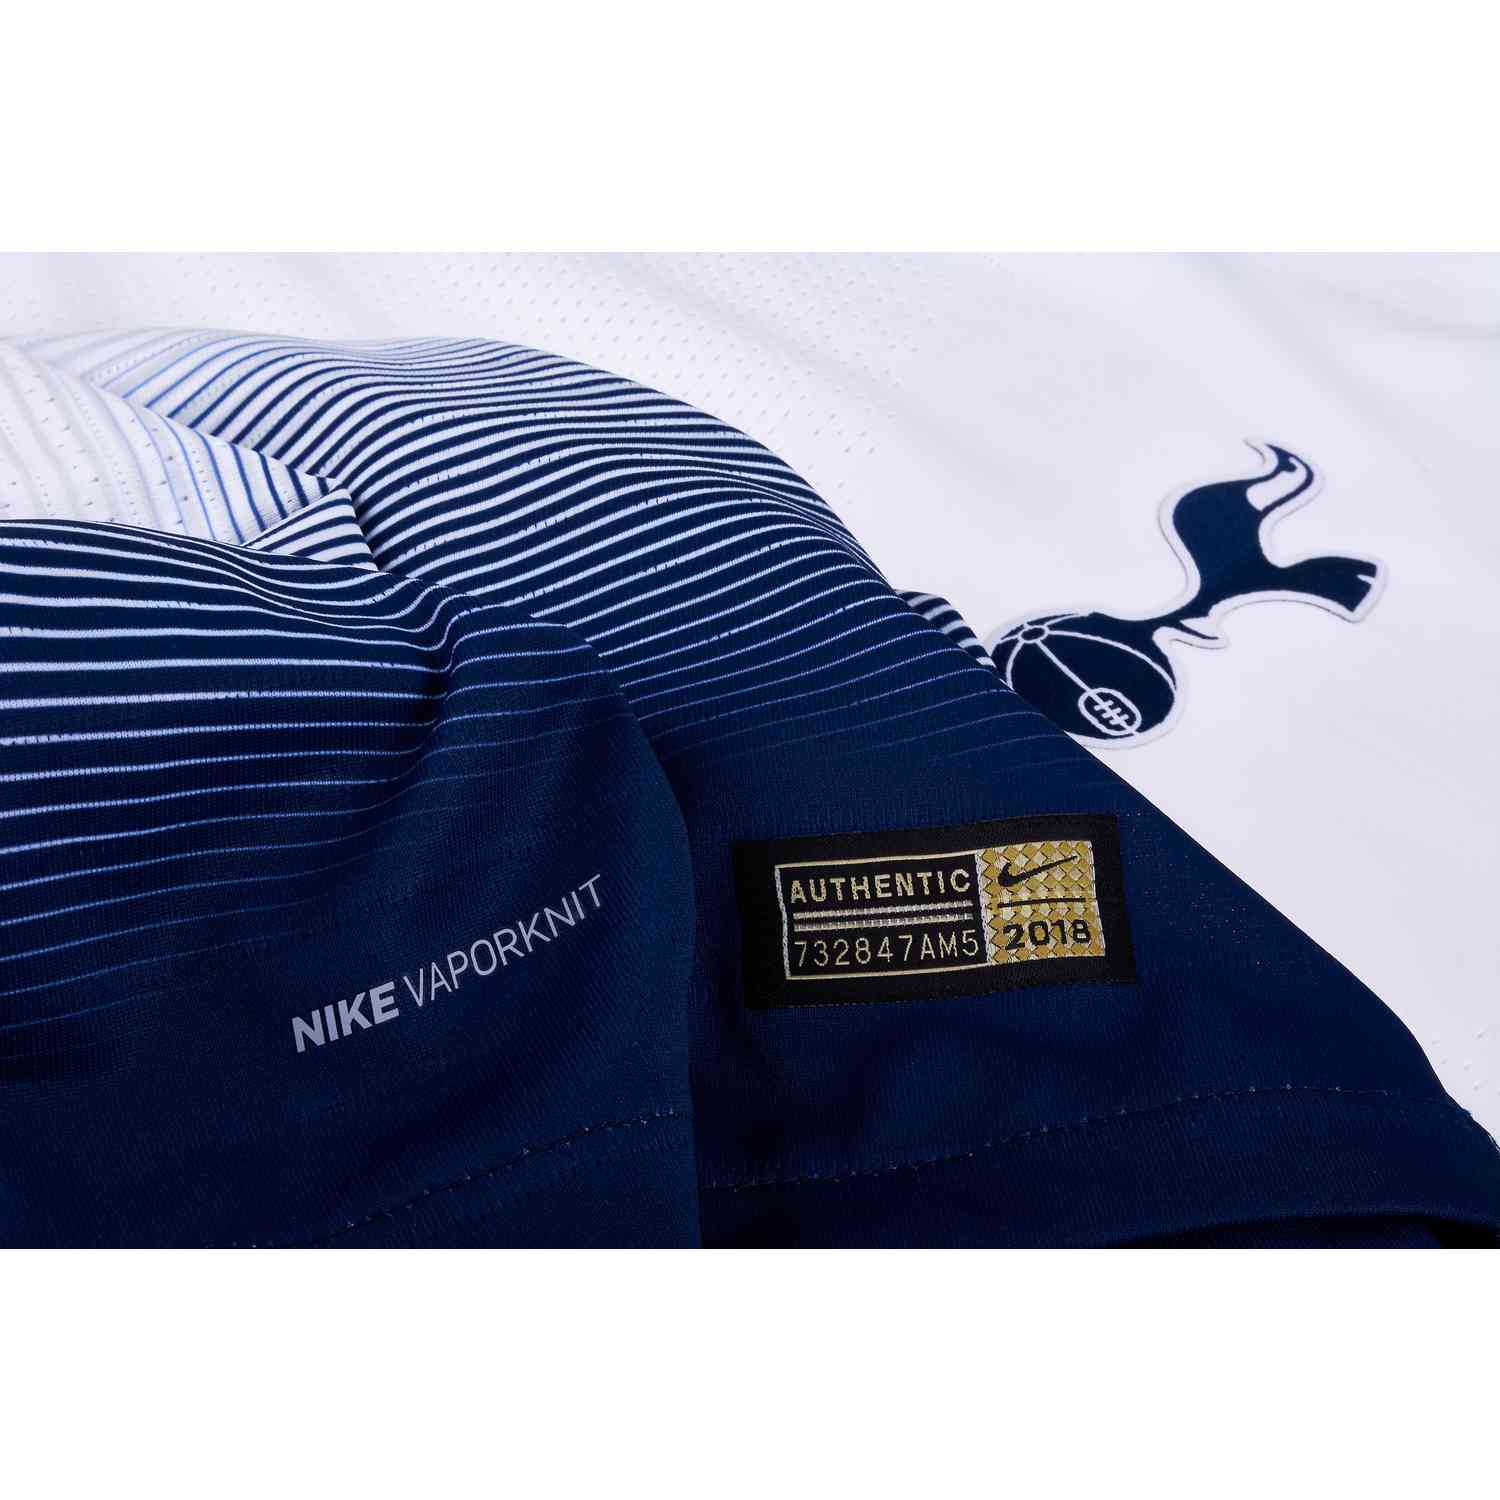 Tottenham Hotspur Nike 2018/19 Home-Authentic Vapor Match Jersey - White